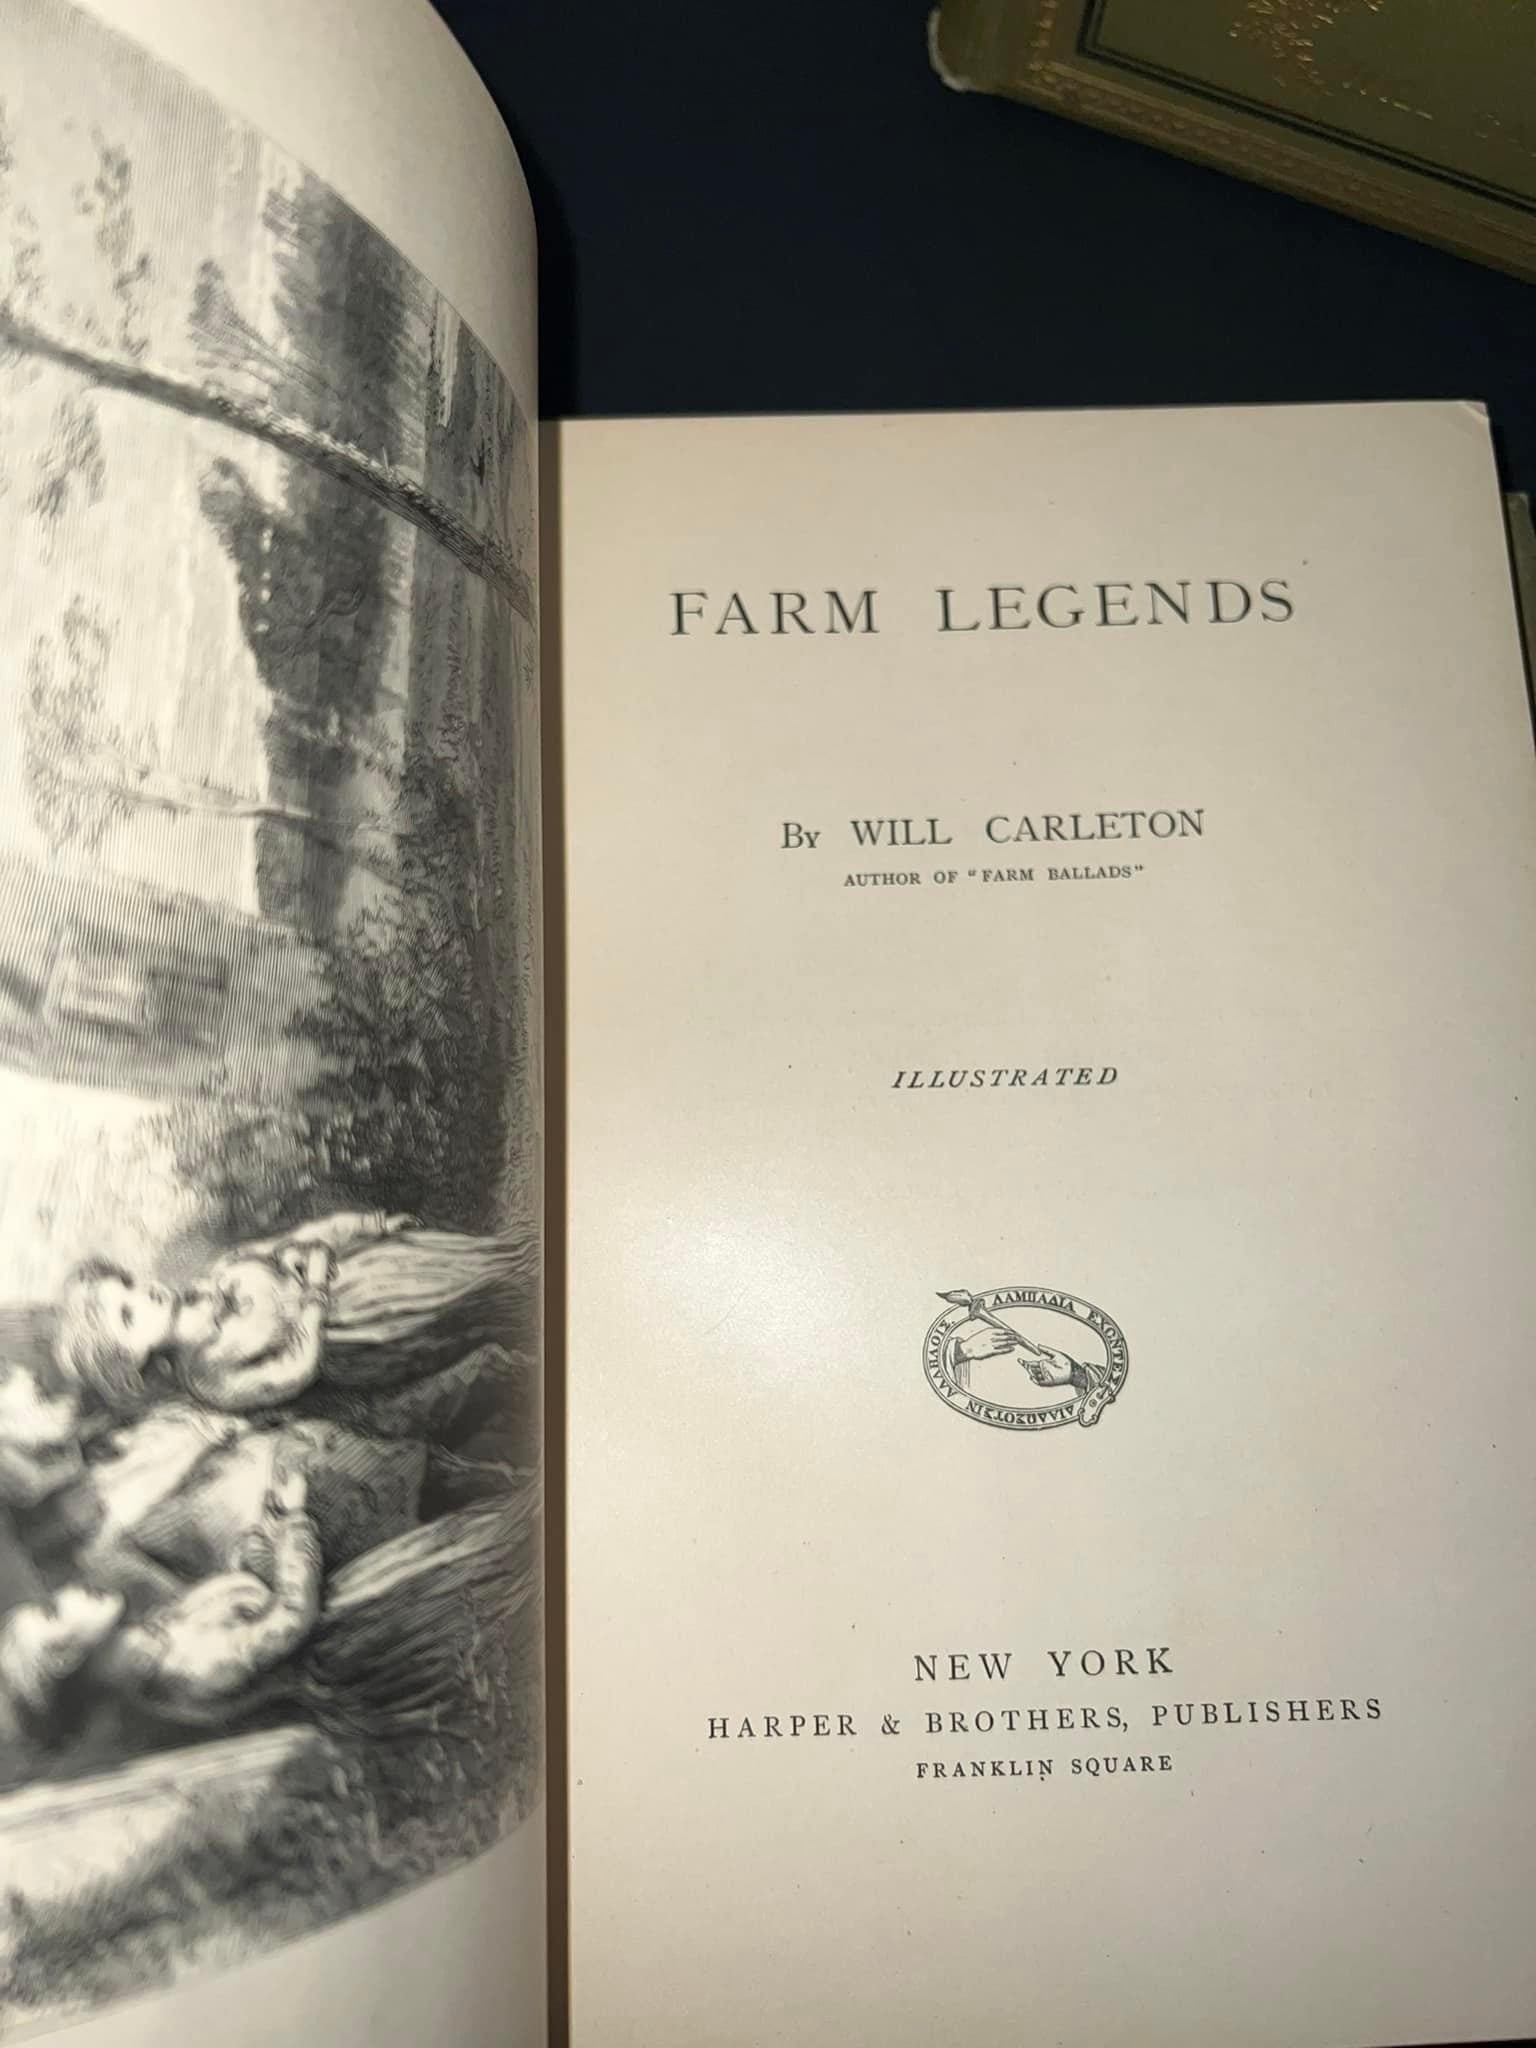 Antique Will Carleton lot C 1880-1890Nice gilt decorated covers 3 volumes - farm ballads , farm legends , city legends